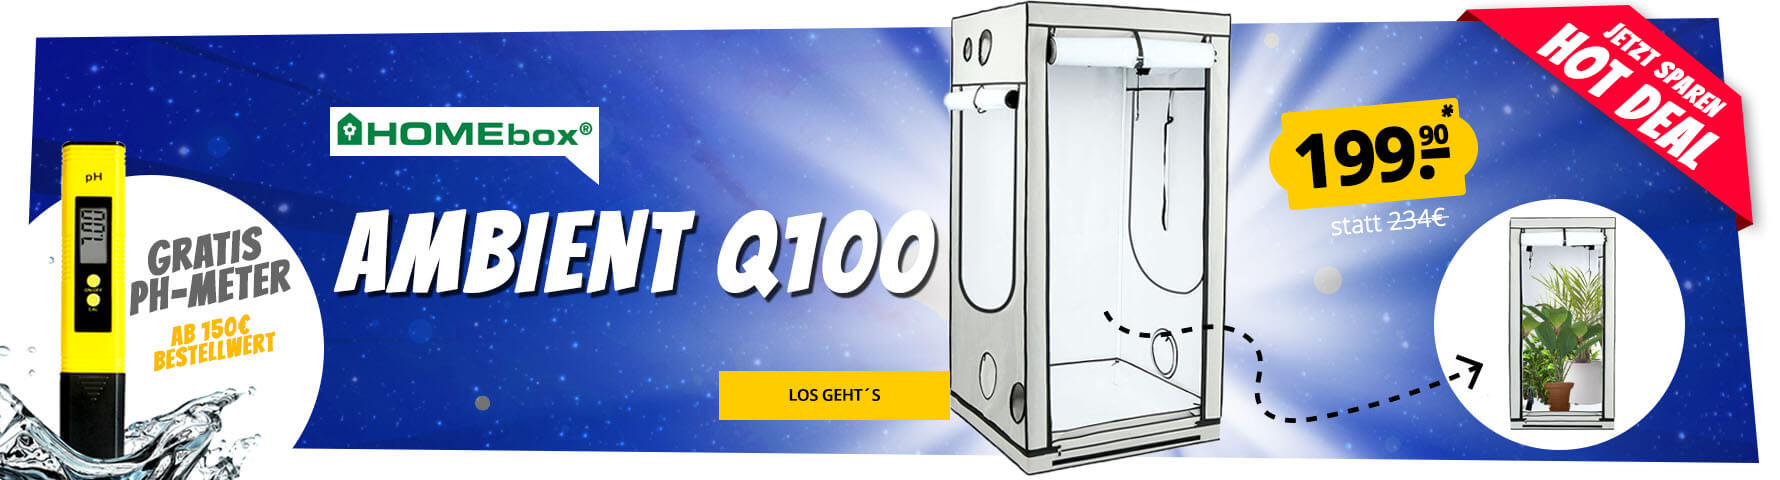 Growversand Slider Growbox Growzelt Homebox Ambient Q100 pH-Meter gratis Hot Deal mobil